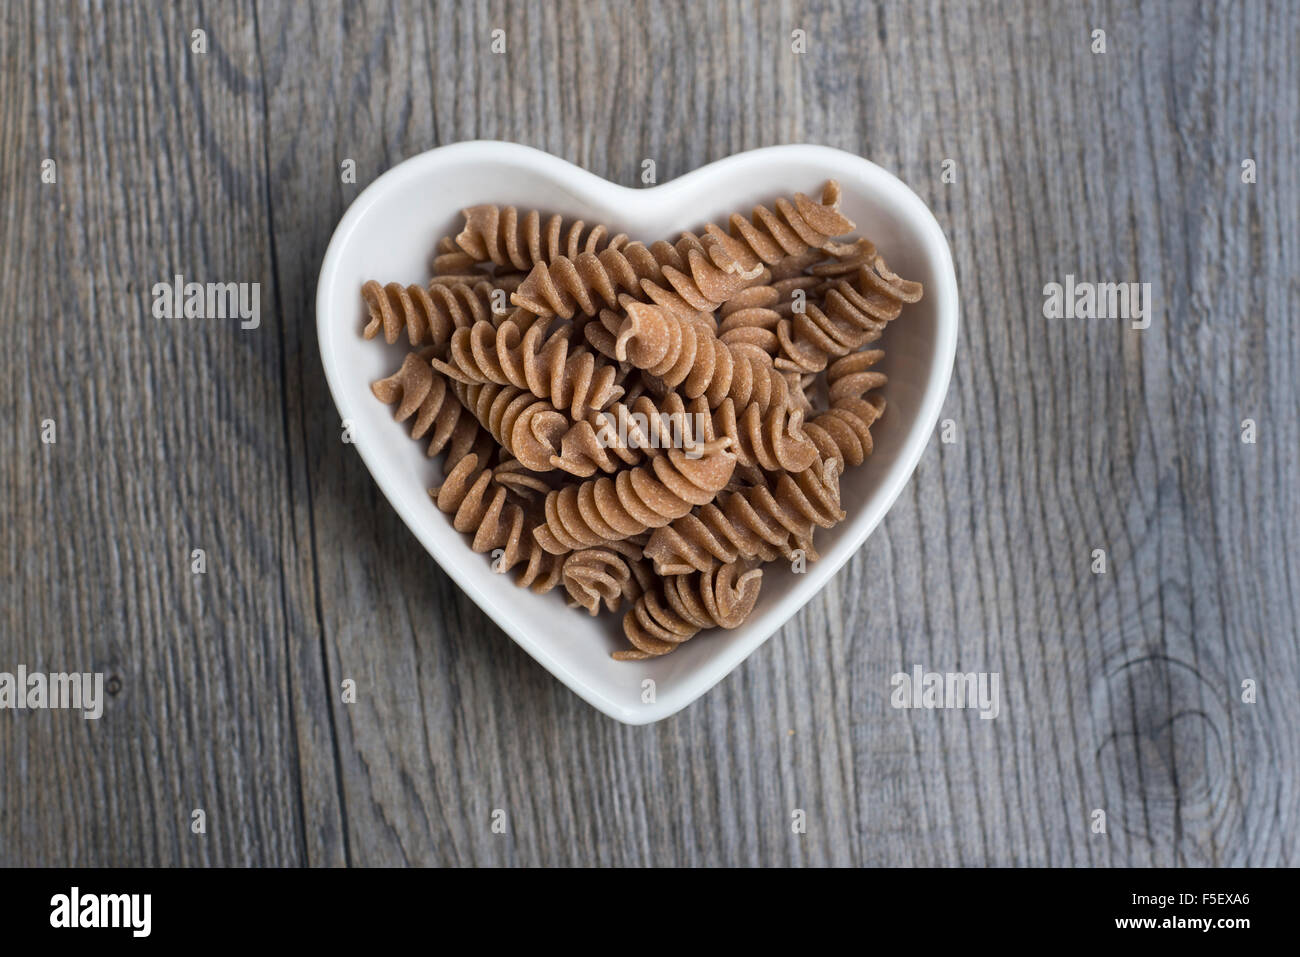 Wholegrain, spelt fusilli pasta in a heart shaped dish Stock Photo